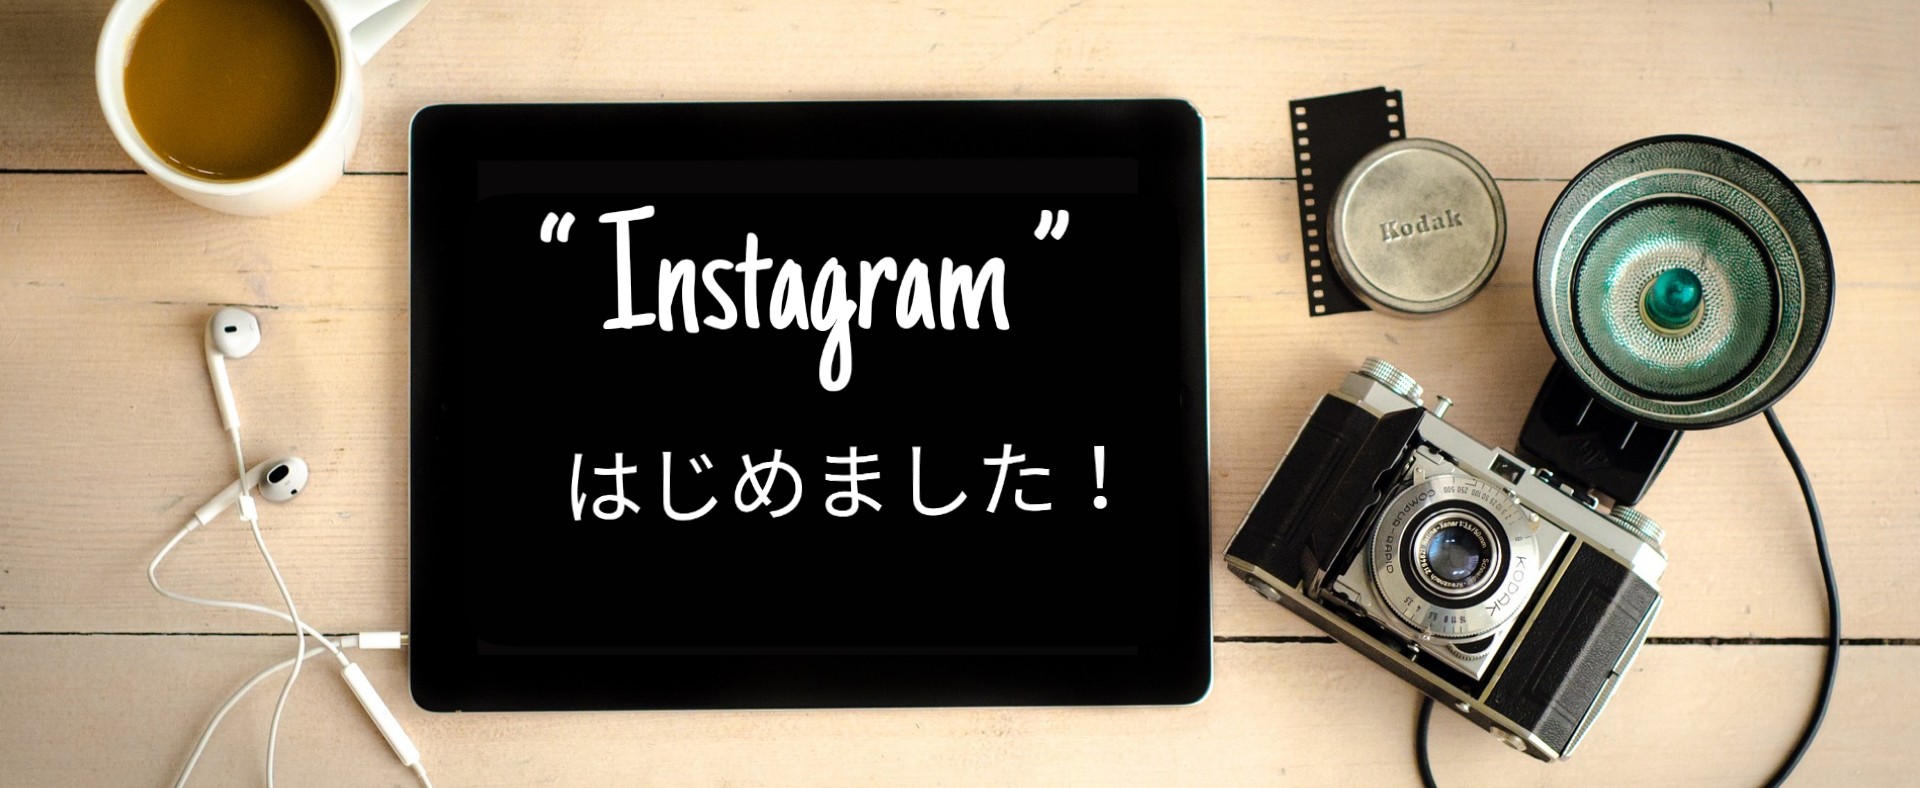 “Instagram”はじめました！